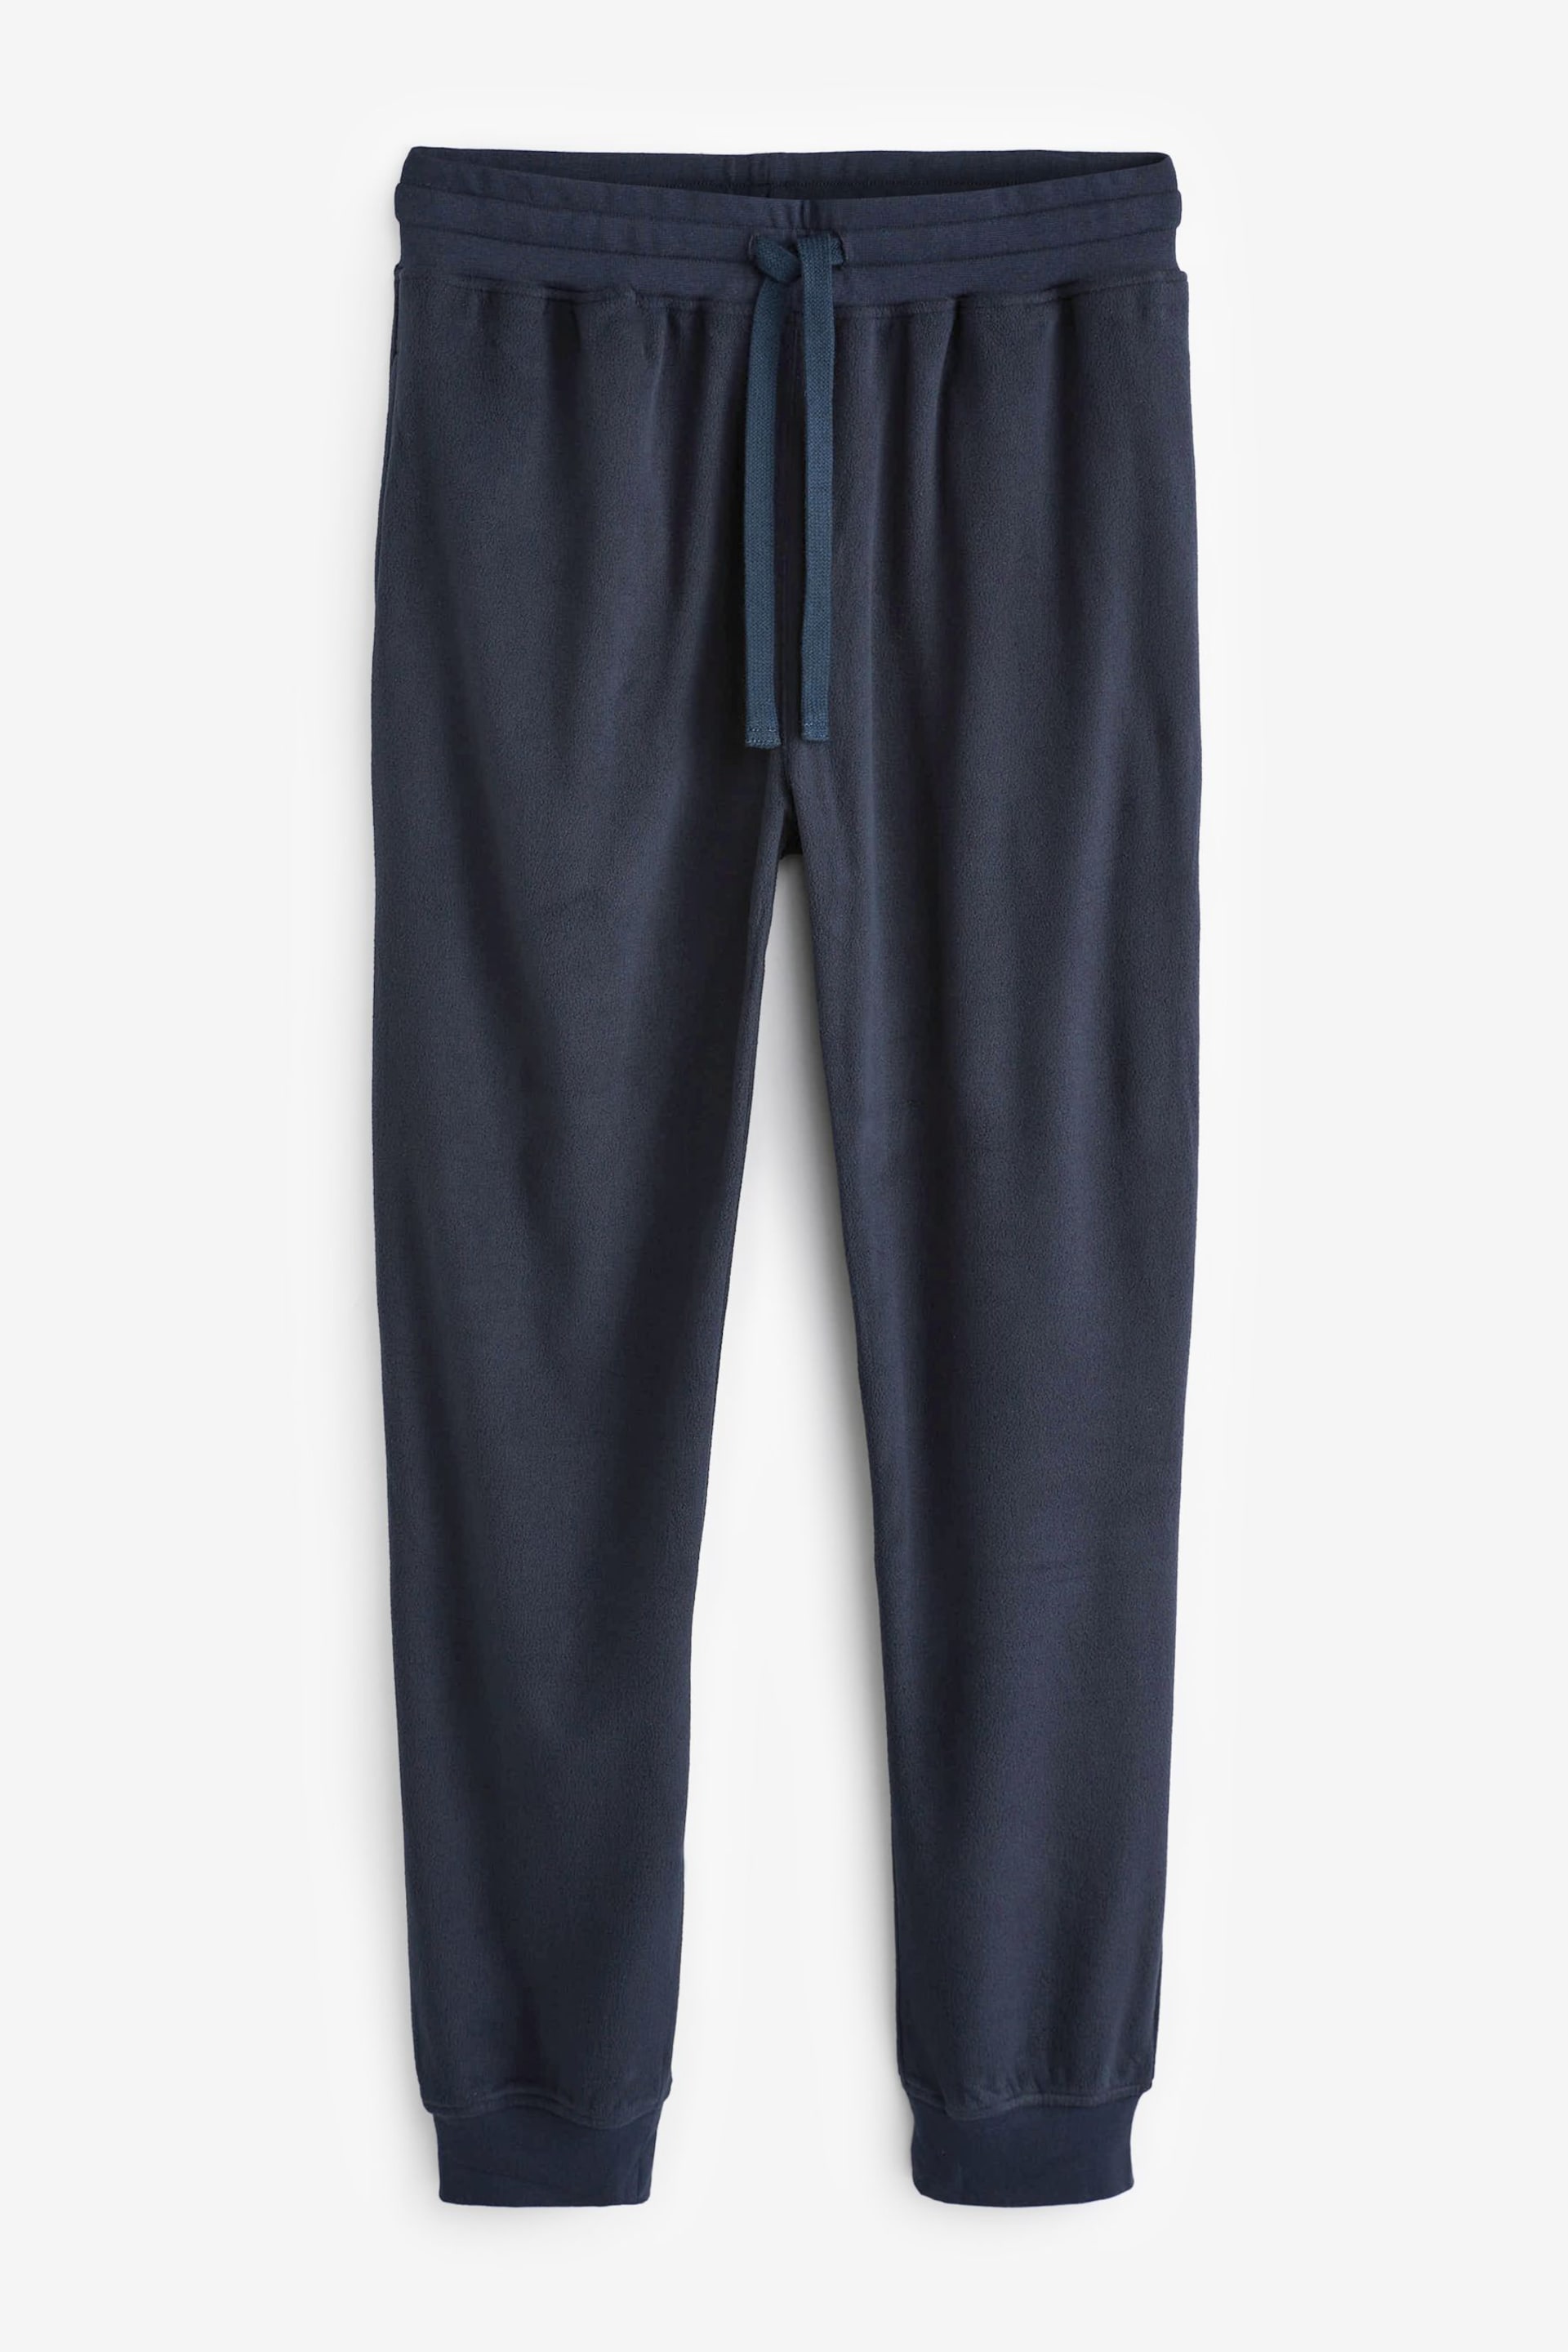 Slate Grey/Navy Blue Thermal Pyjama Set - Image 9 of 11